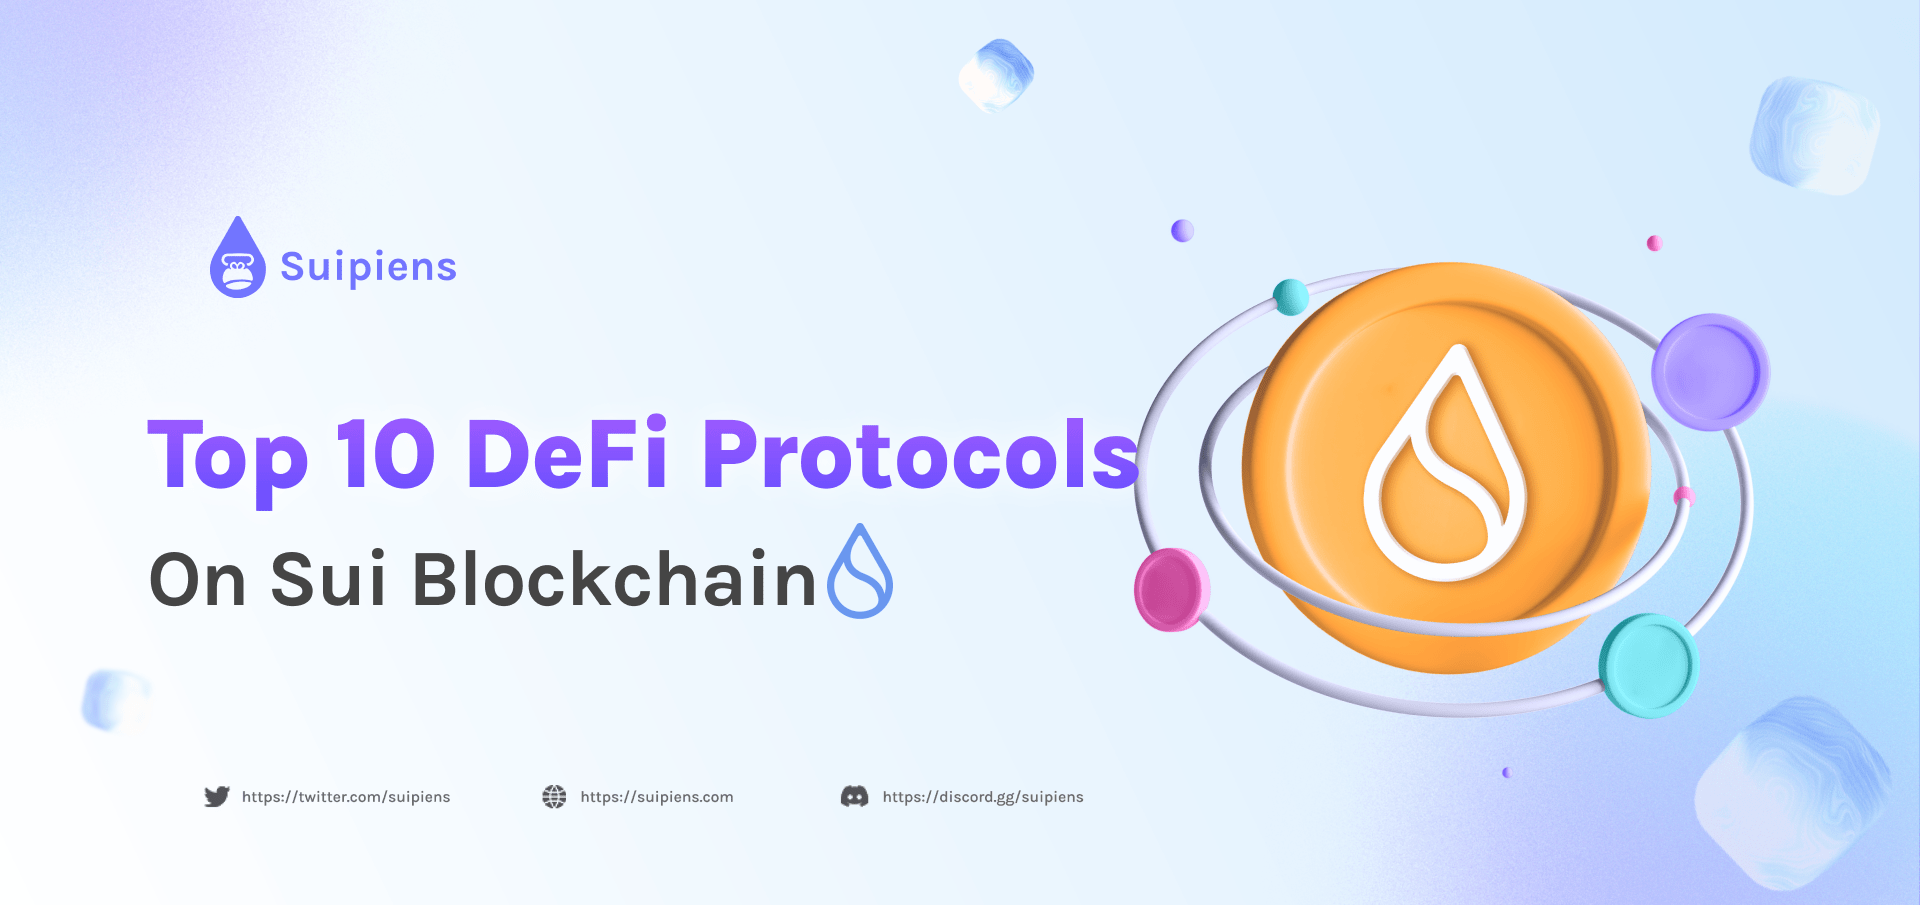 Top 10 DeFi Protocols On Sui Blockchain